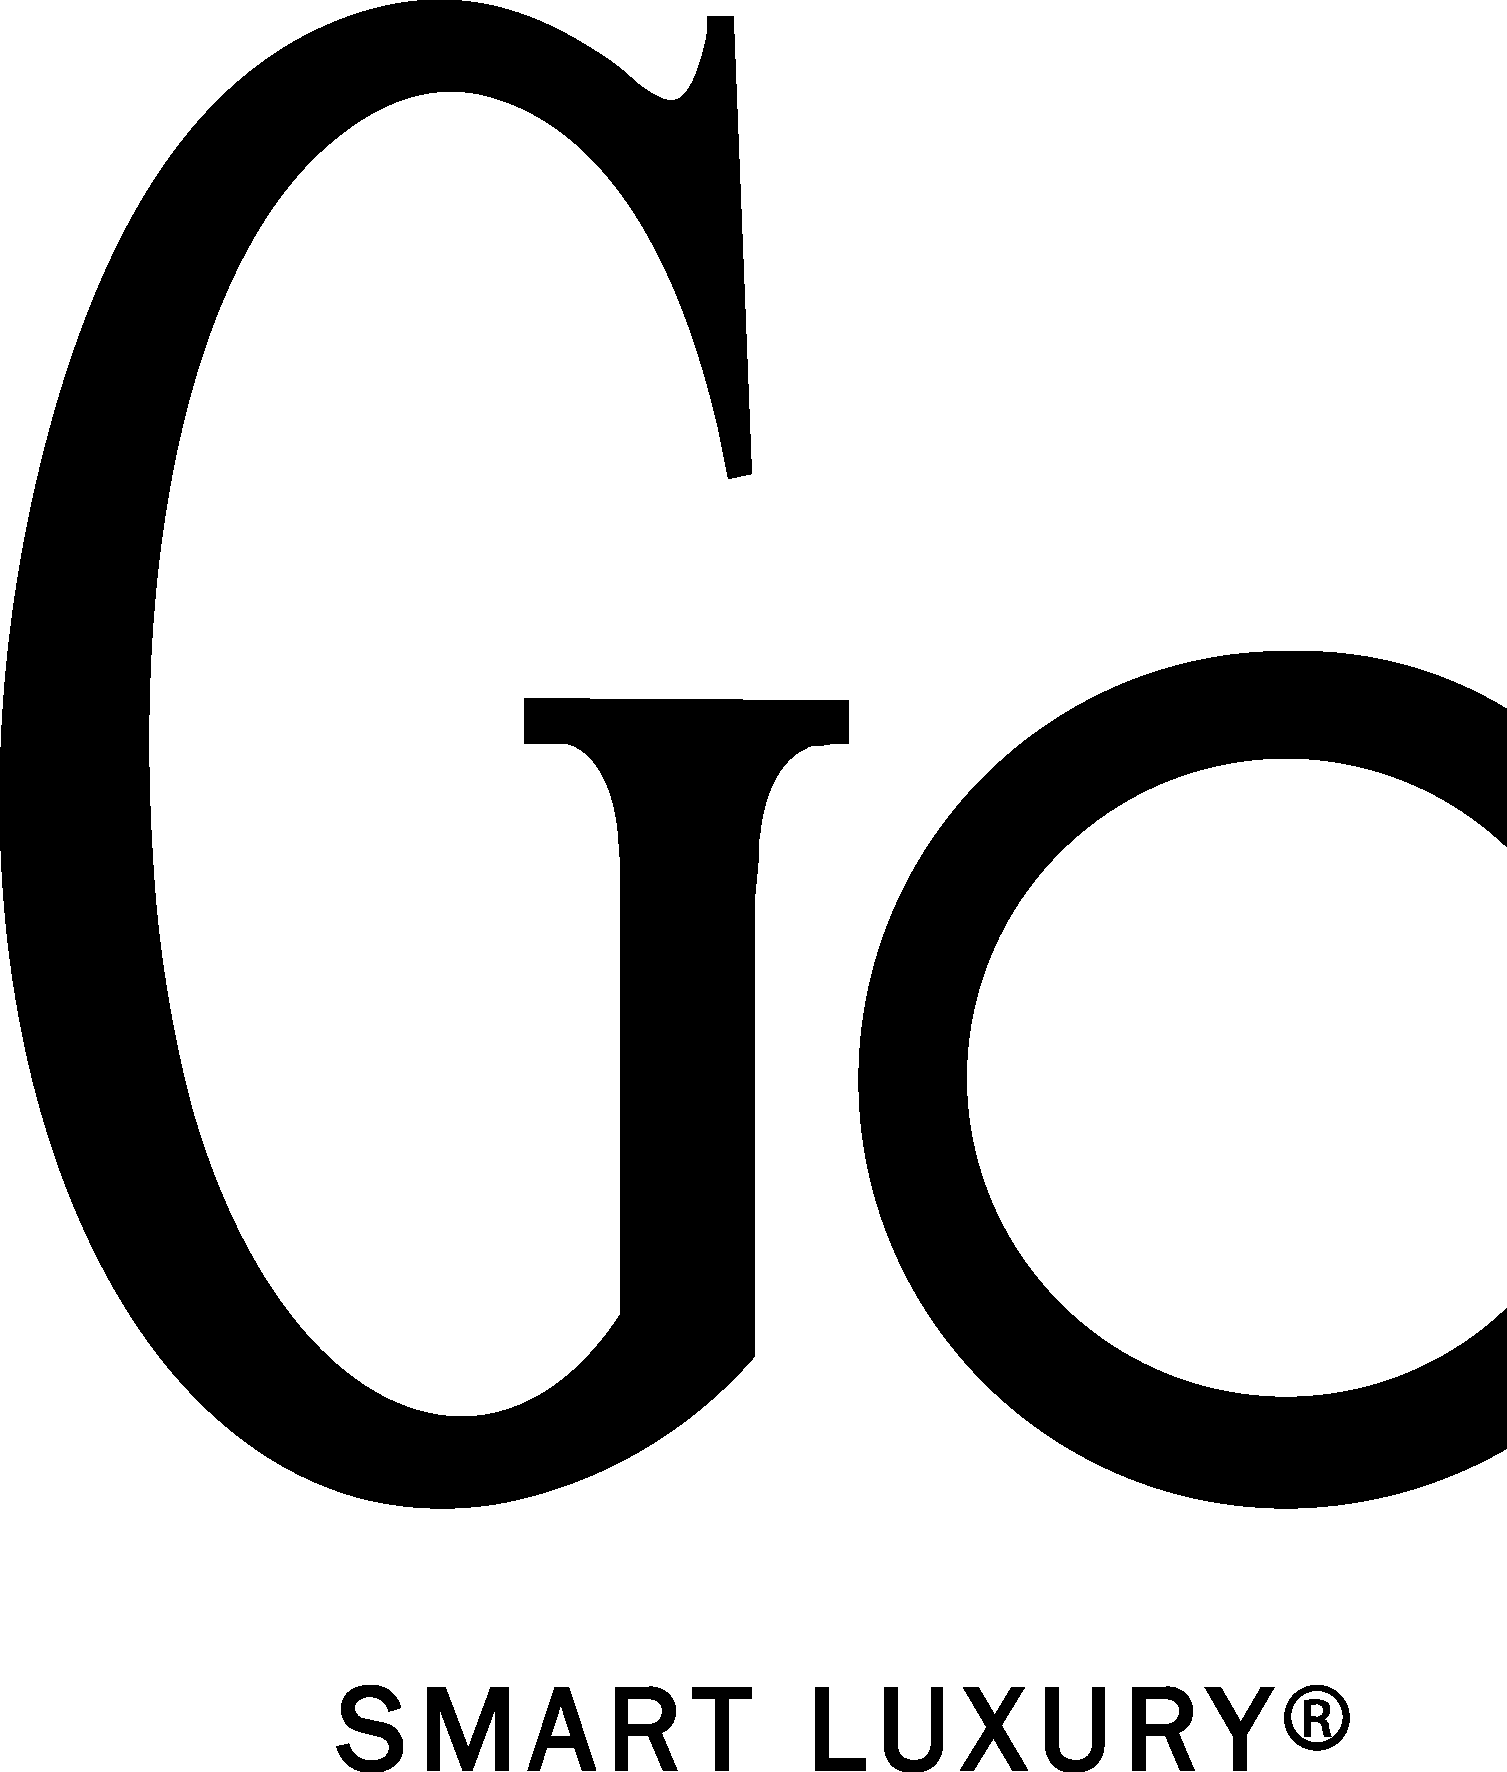 GC Logo [Watch]